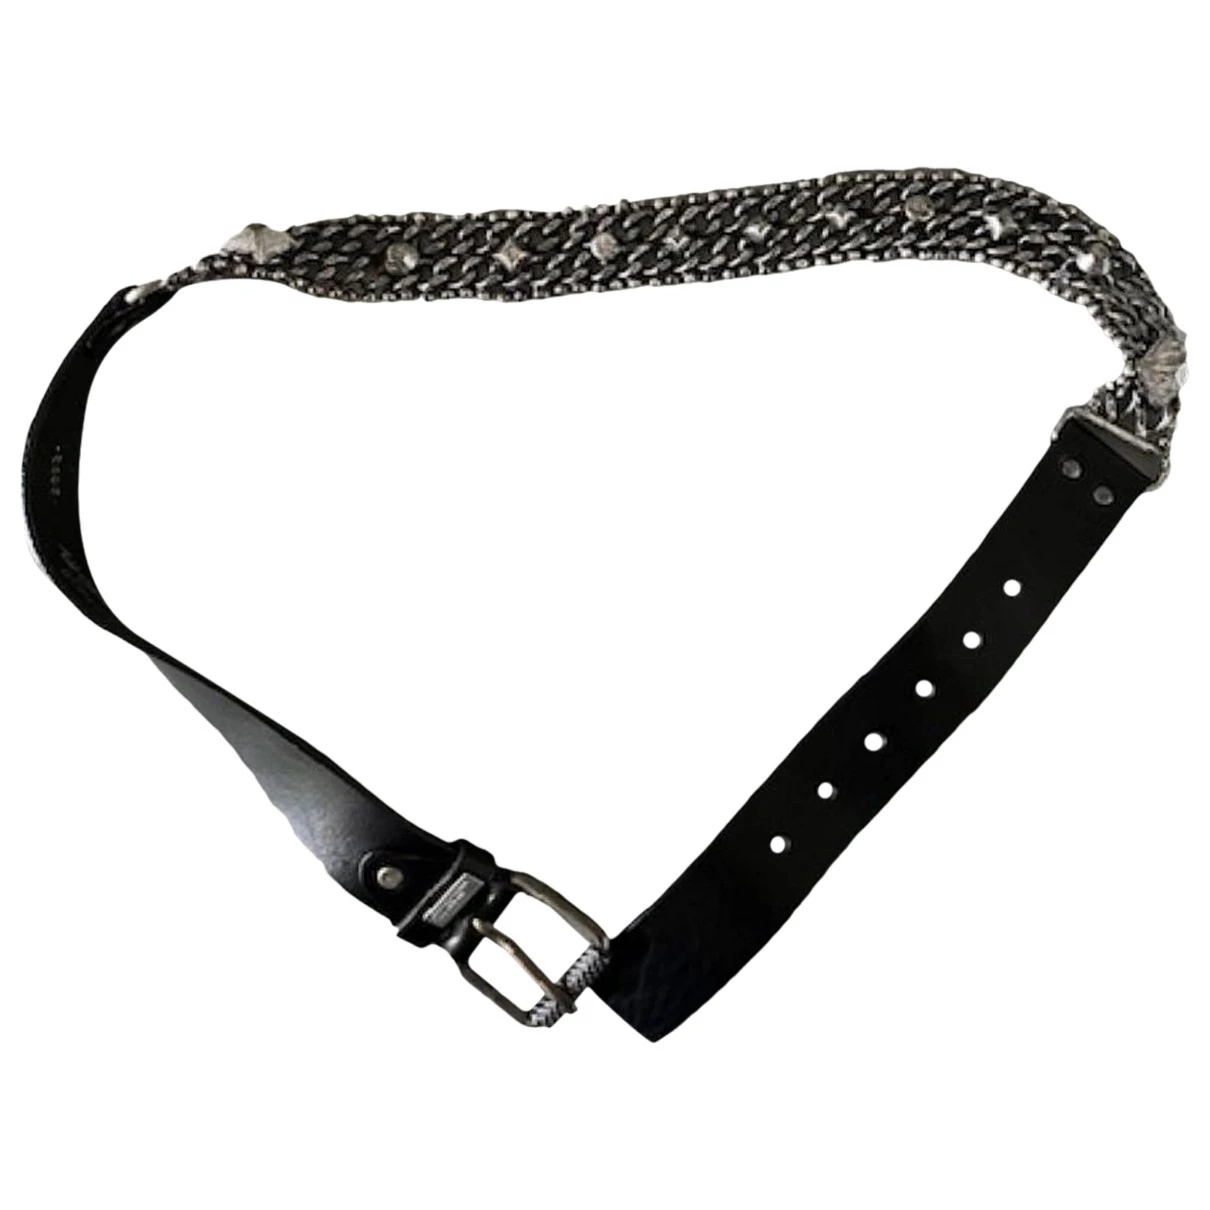 accessories Roberto Cavalli belts for Female Chain 95 cm. Used condition